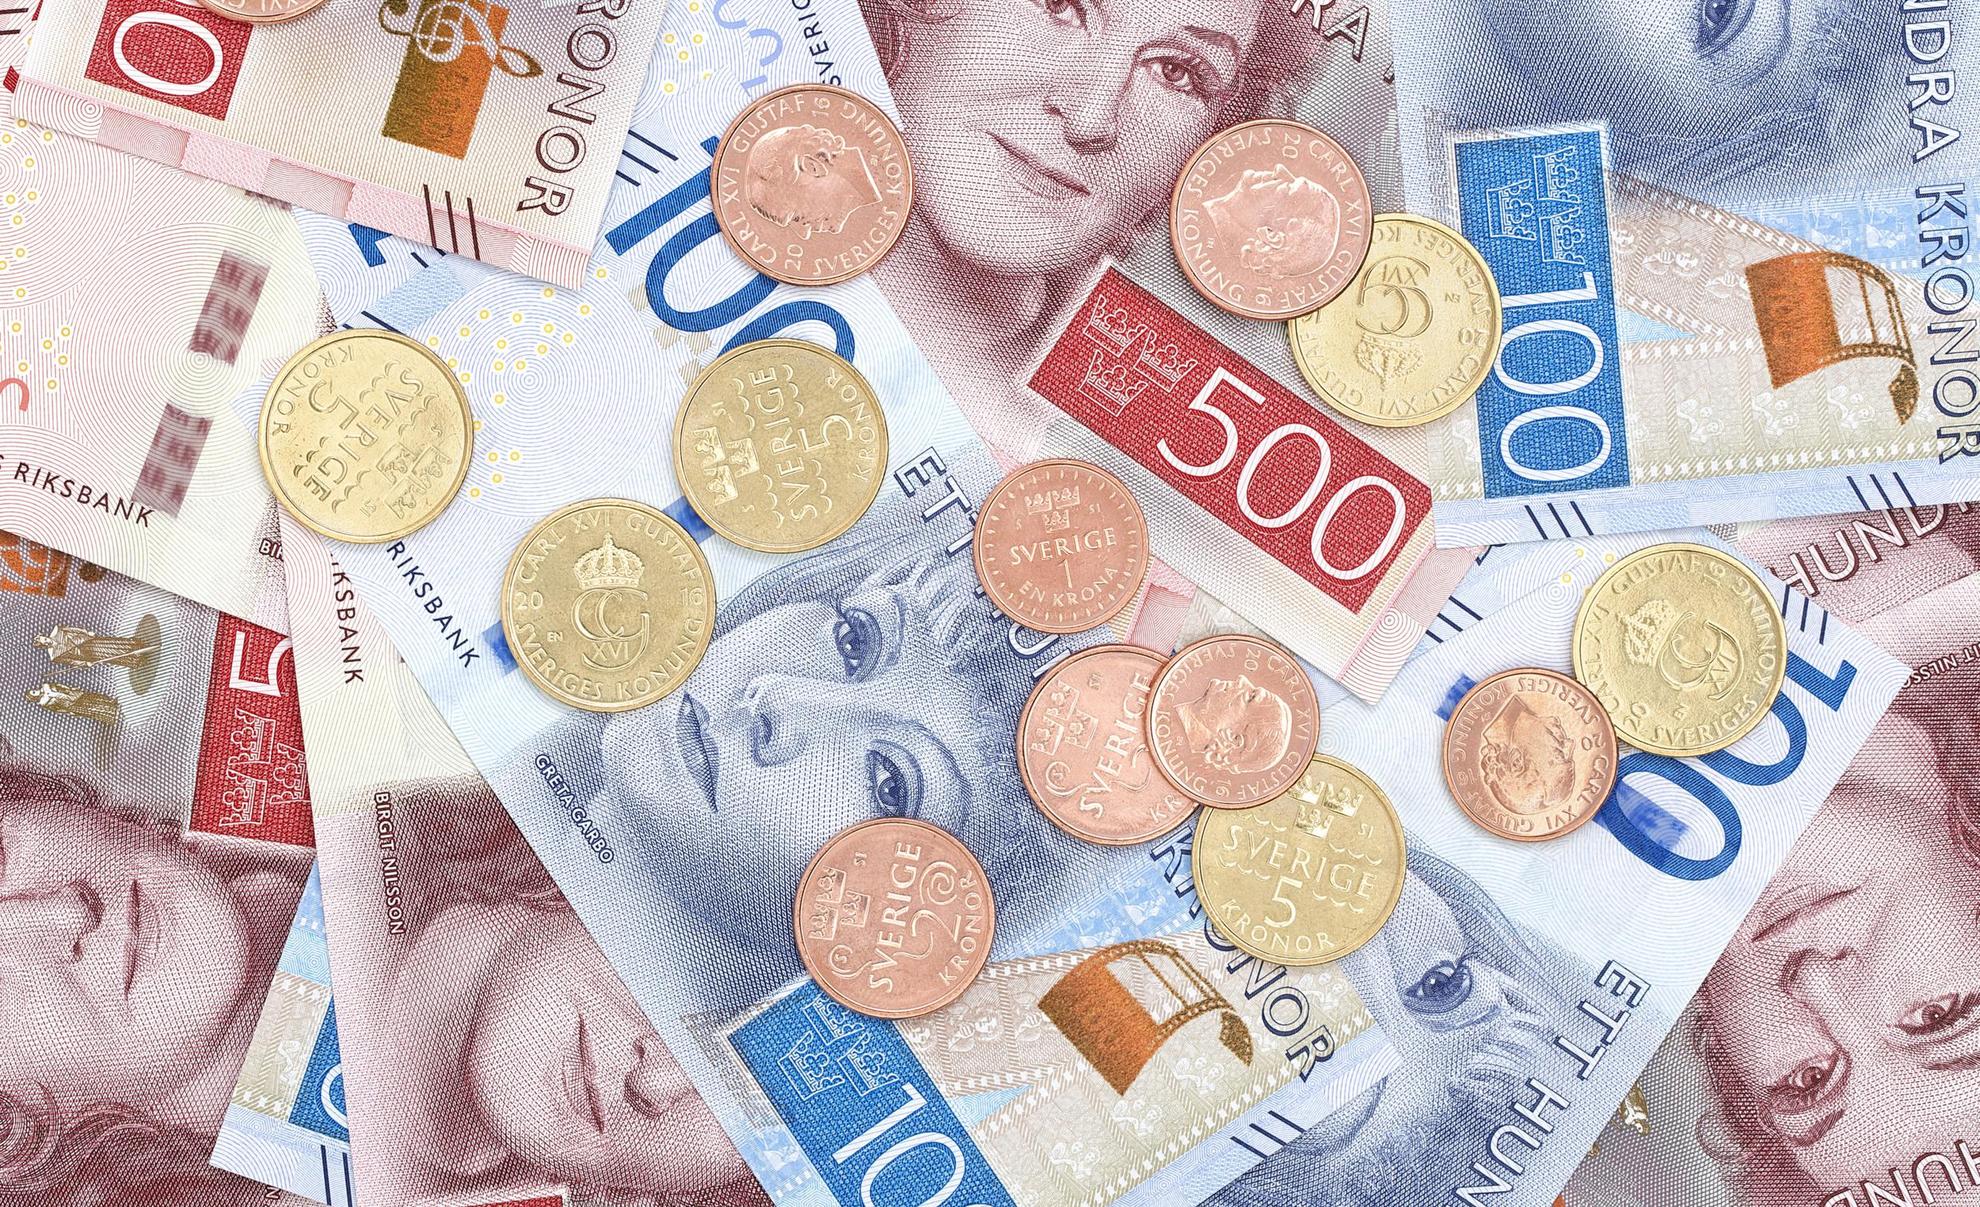 Swedish banknotes and coins